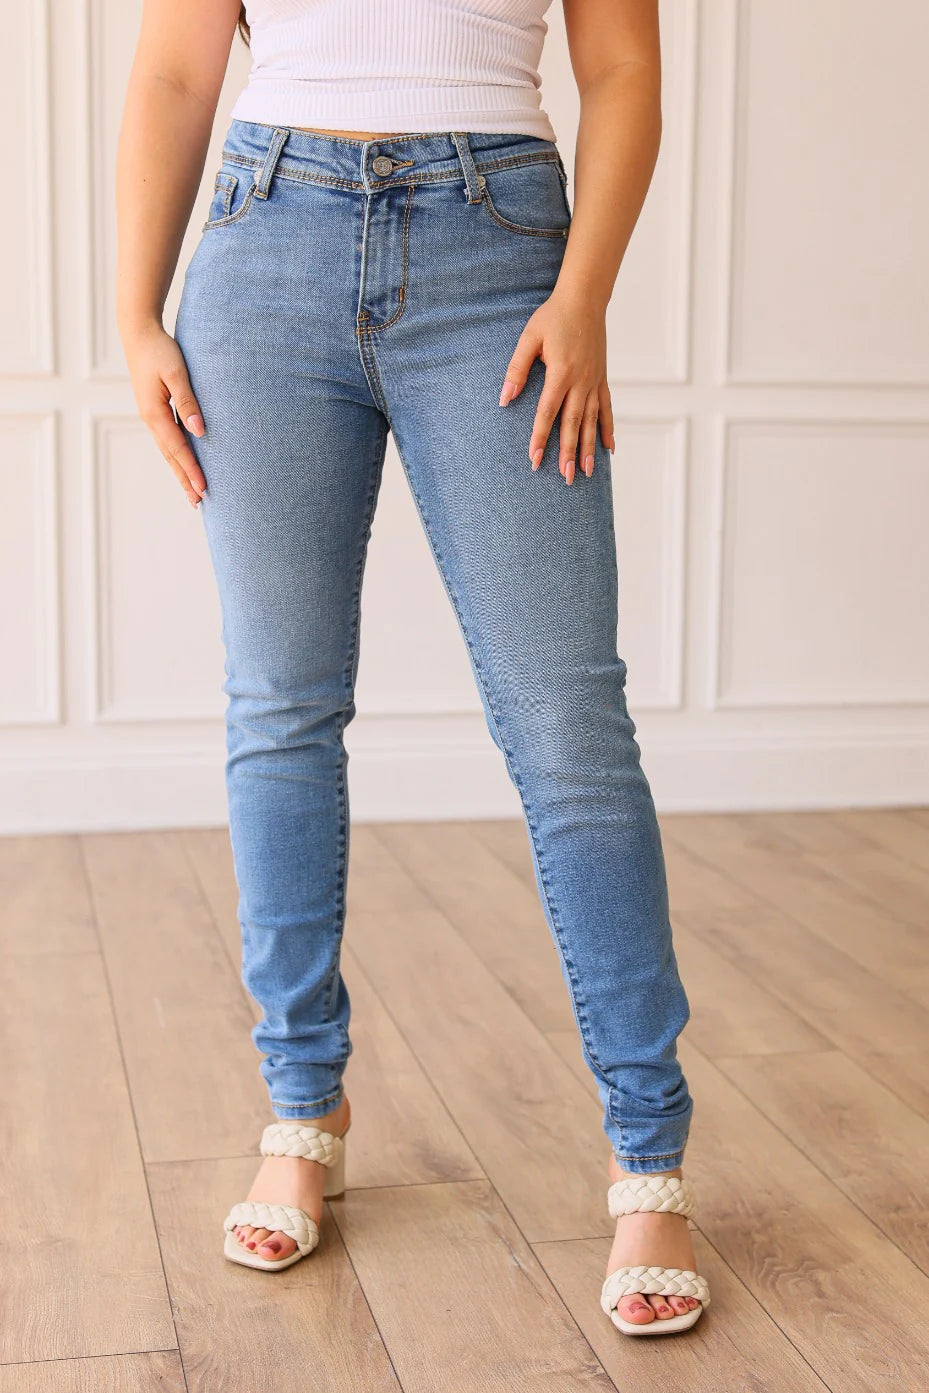 The Paris Highrise Skinny Jean